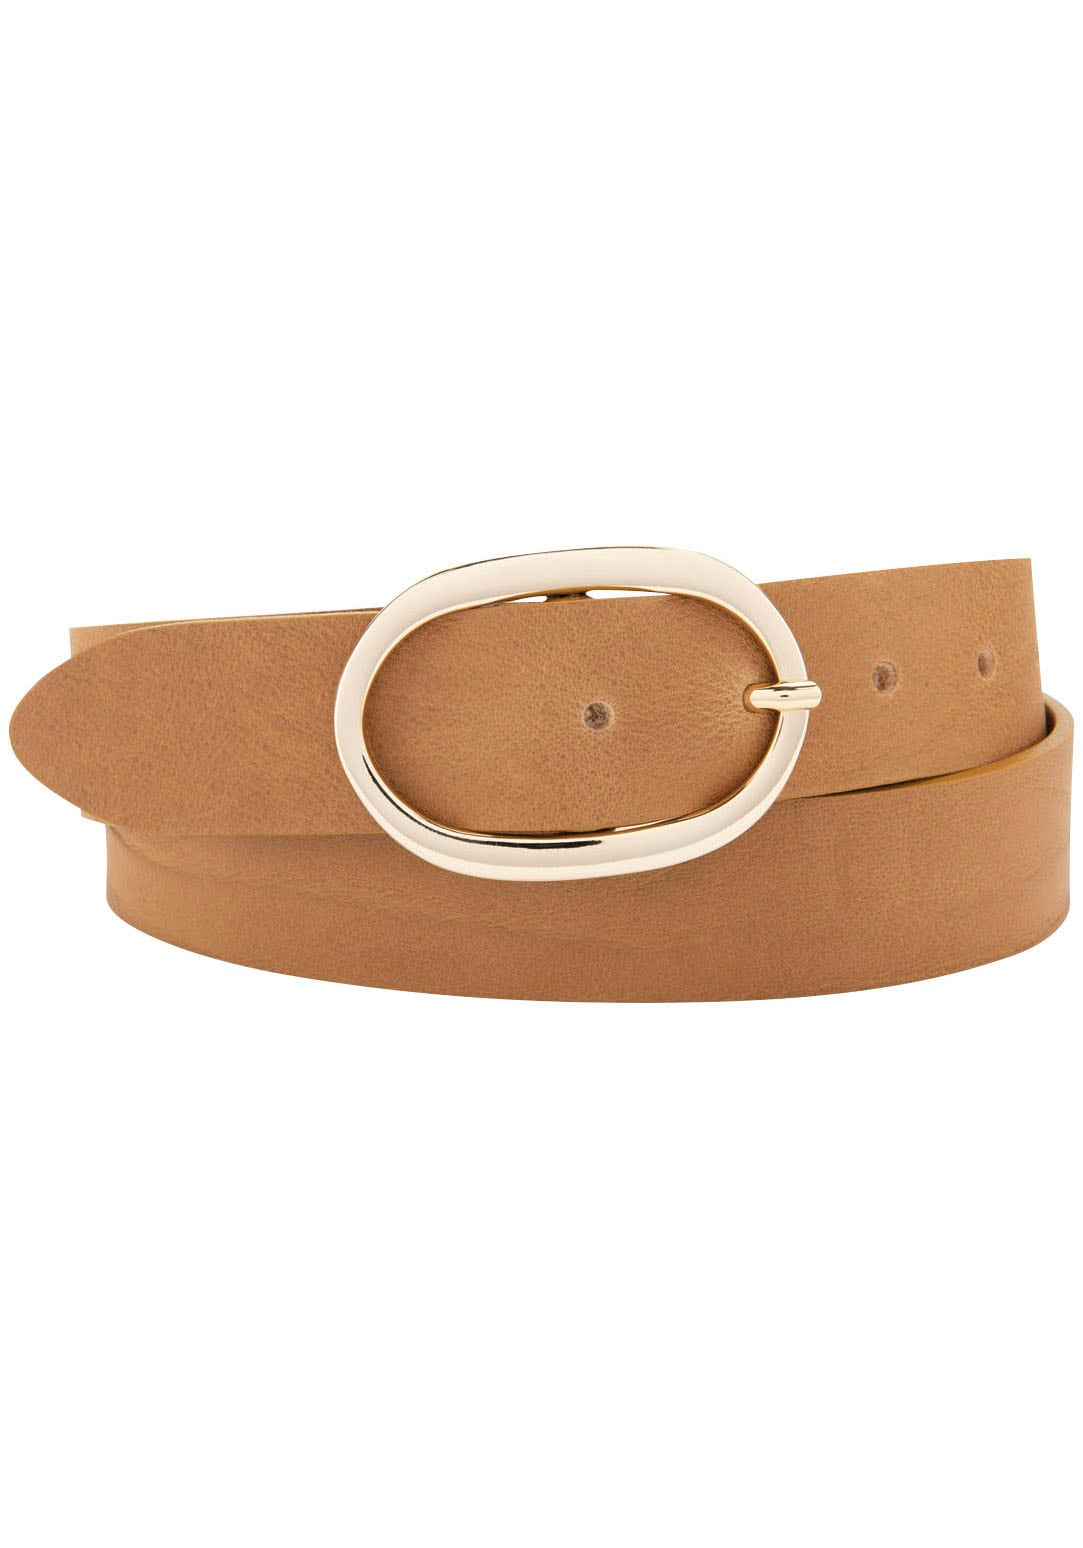 BERND GÖTZ Ledergürtel, Ledergürtel aus Vollrind mit eleganter goldener  Ovalschließe online kaufen | UNIVERSAL